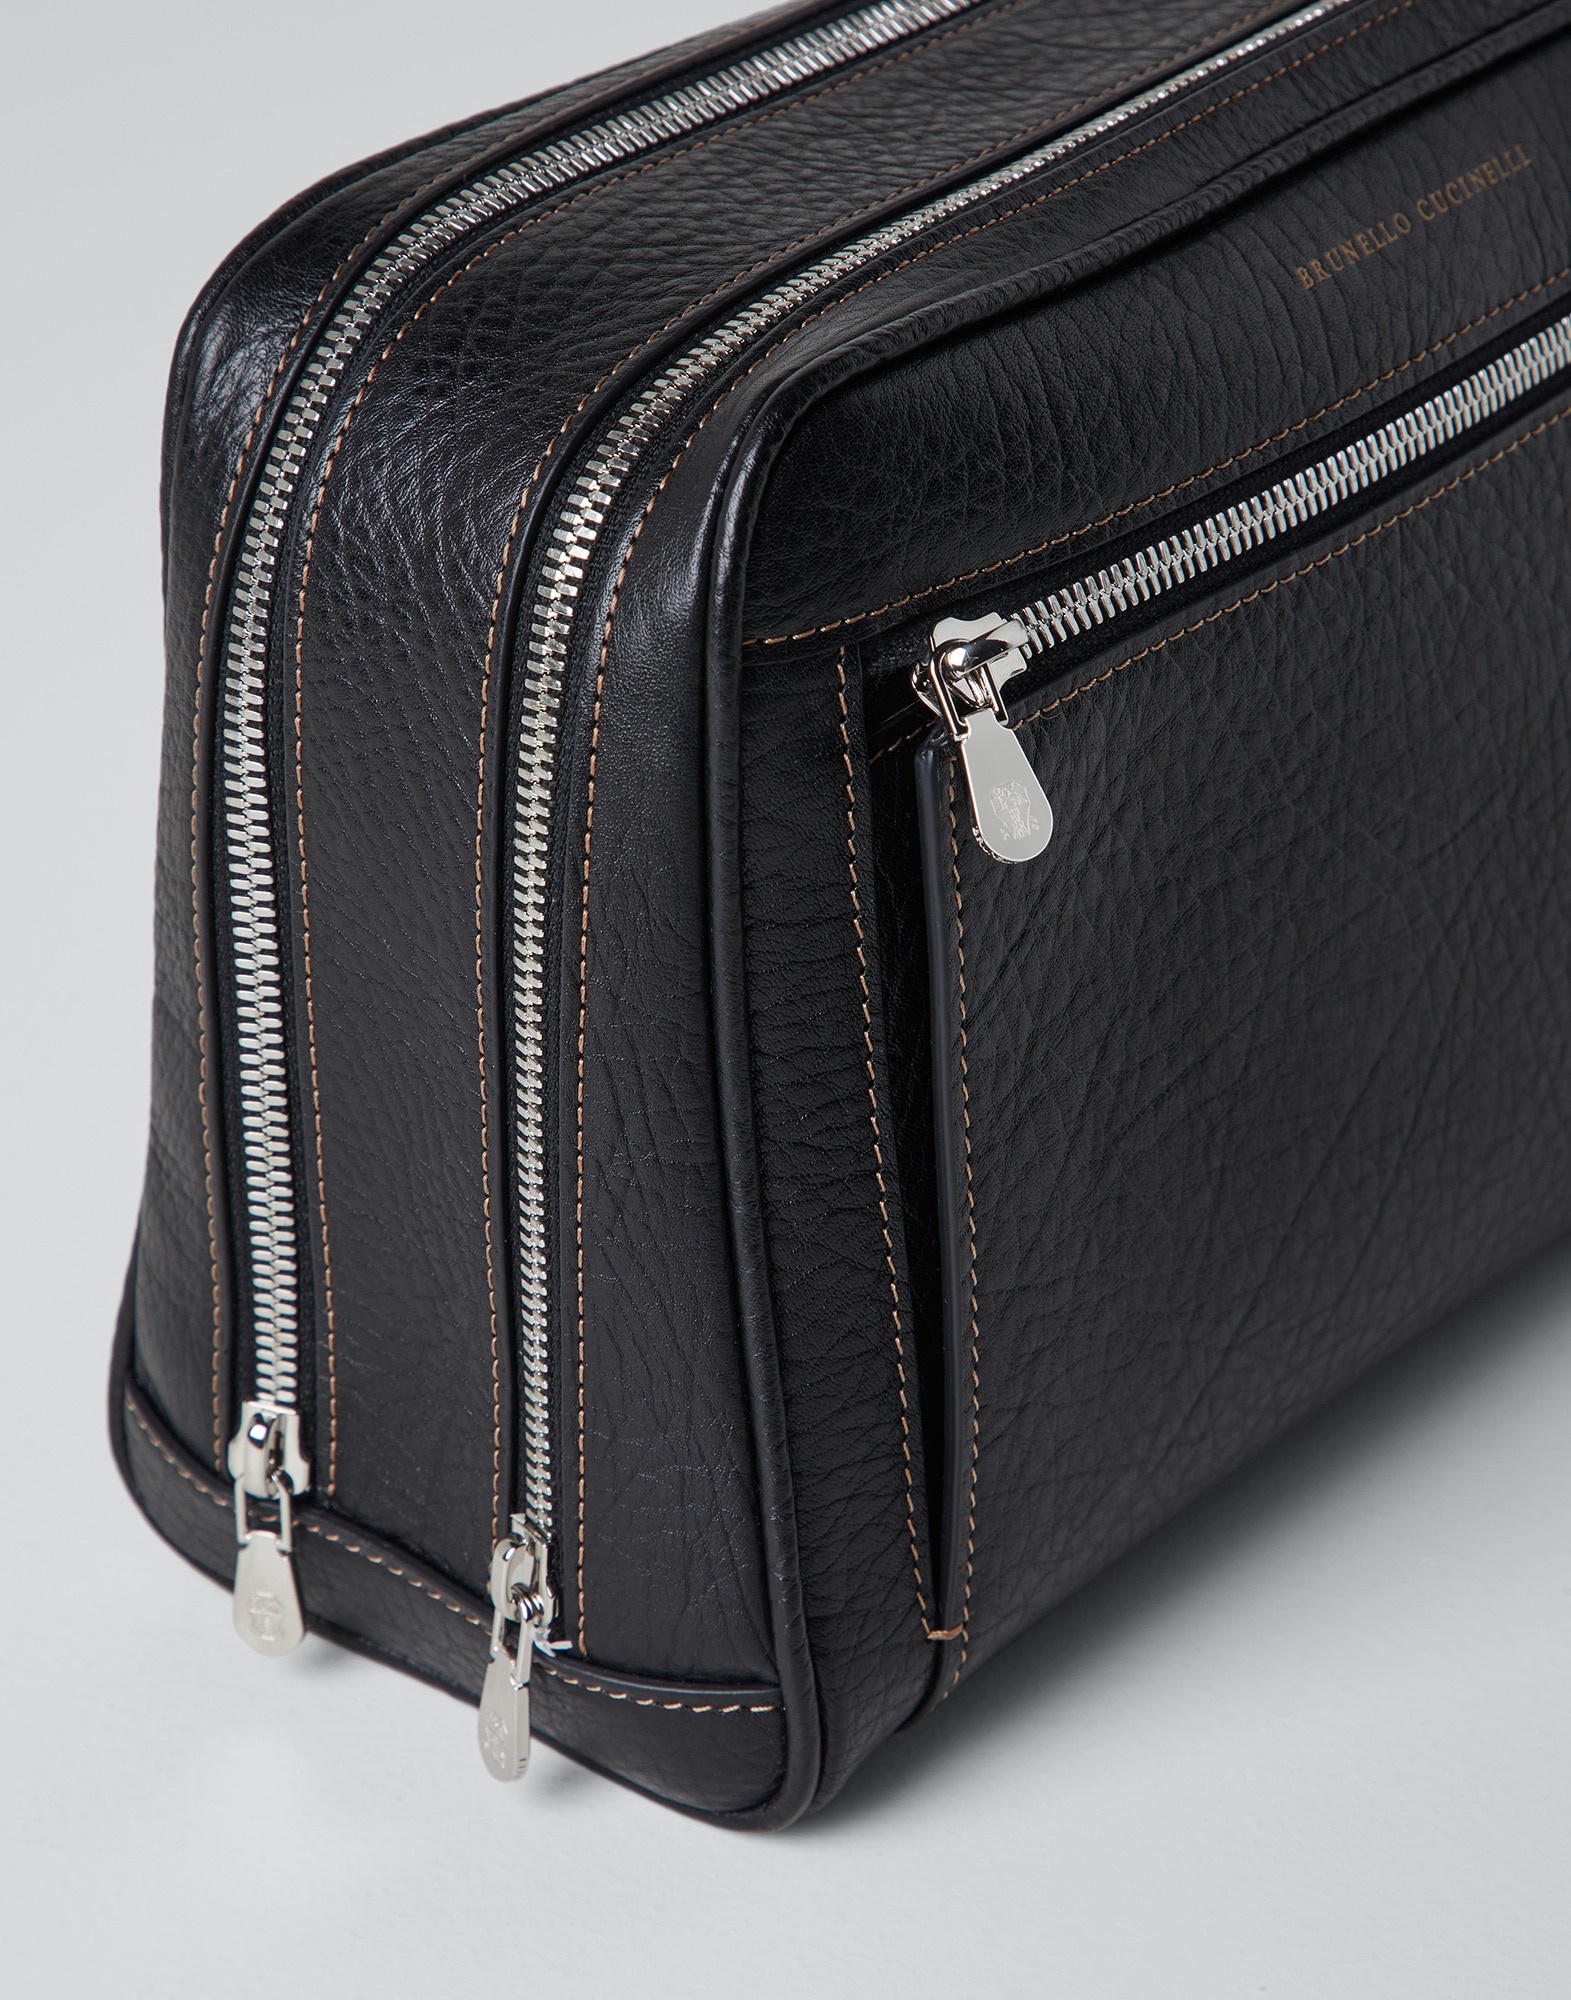 Grained calfskin beauty case with double zipper - 3